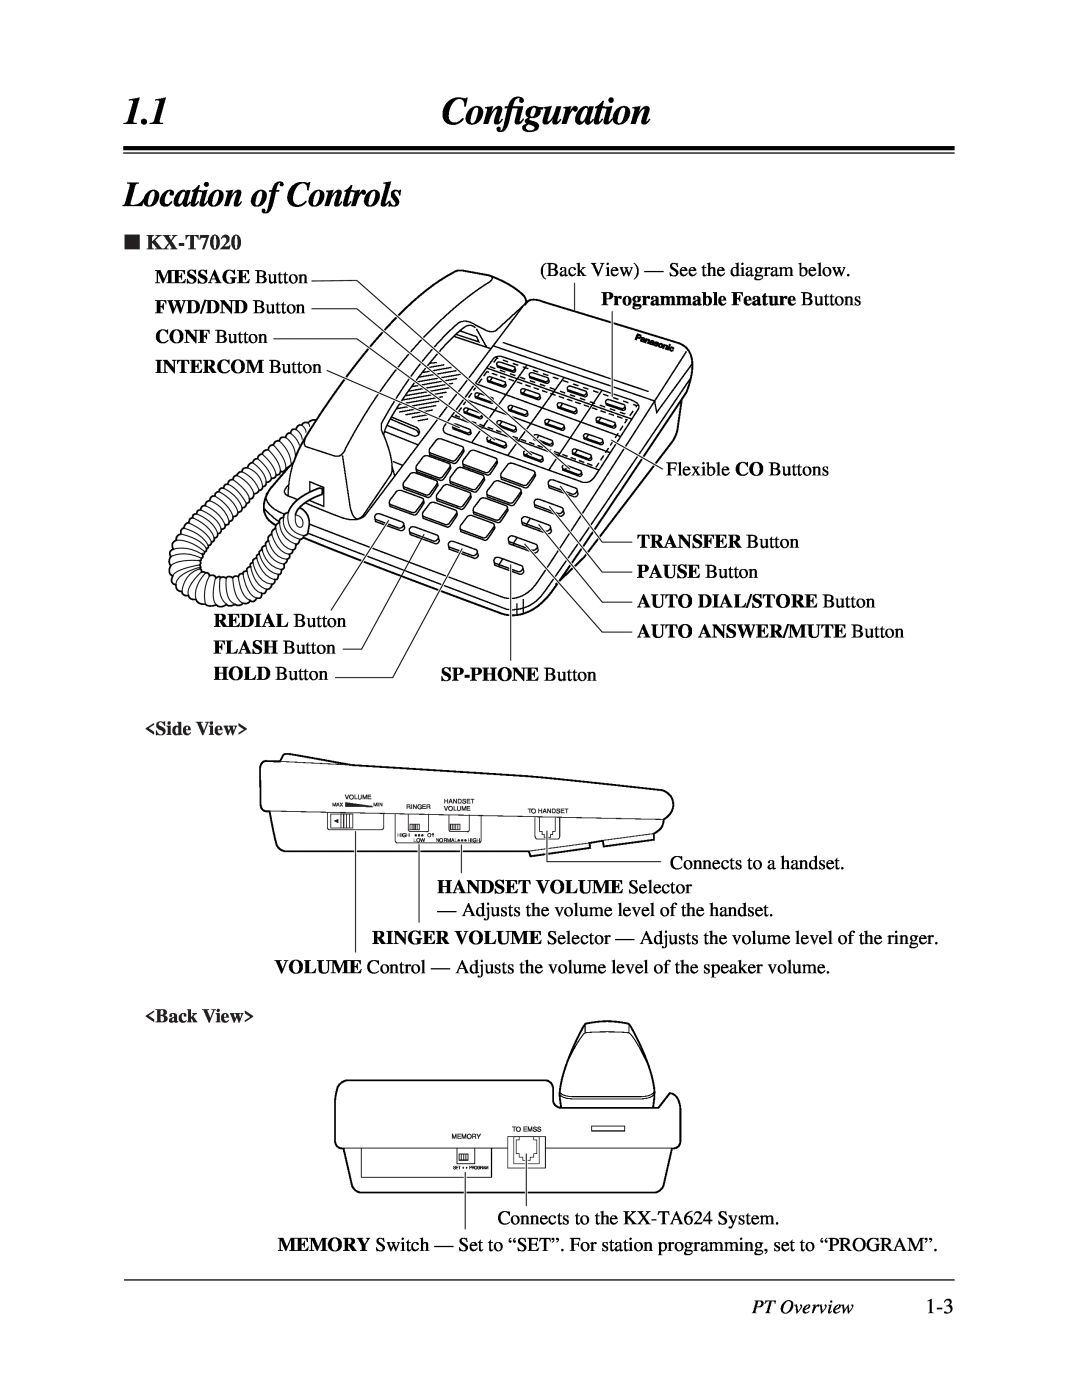 Panasonic KX-TA624 user manual Location of Controls, KX-T7020, 1.1Conﬁguration, PT Overview 